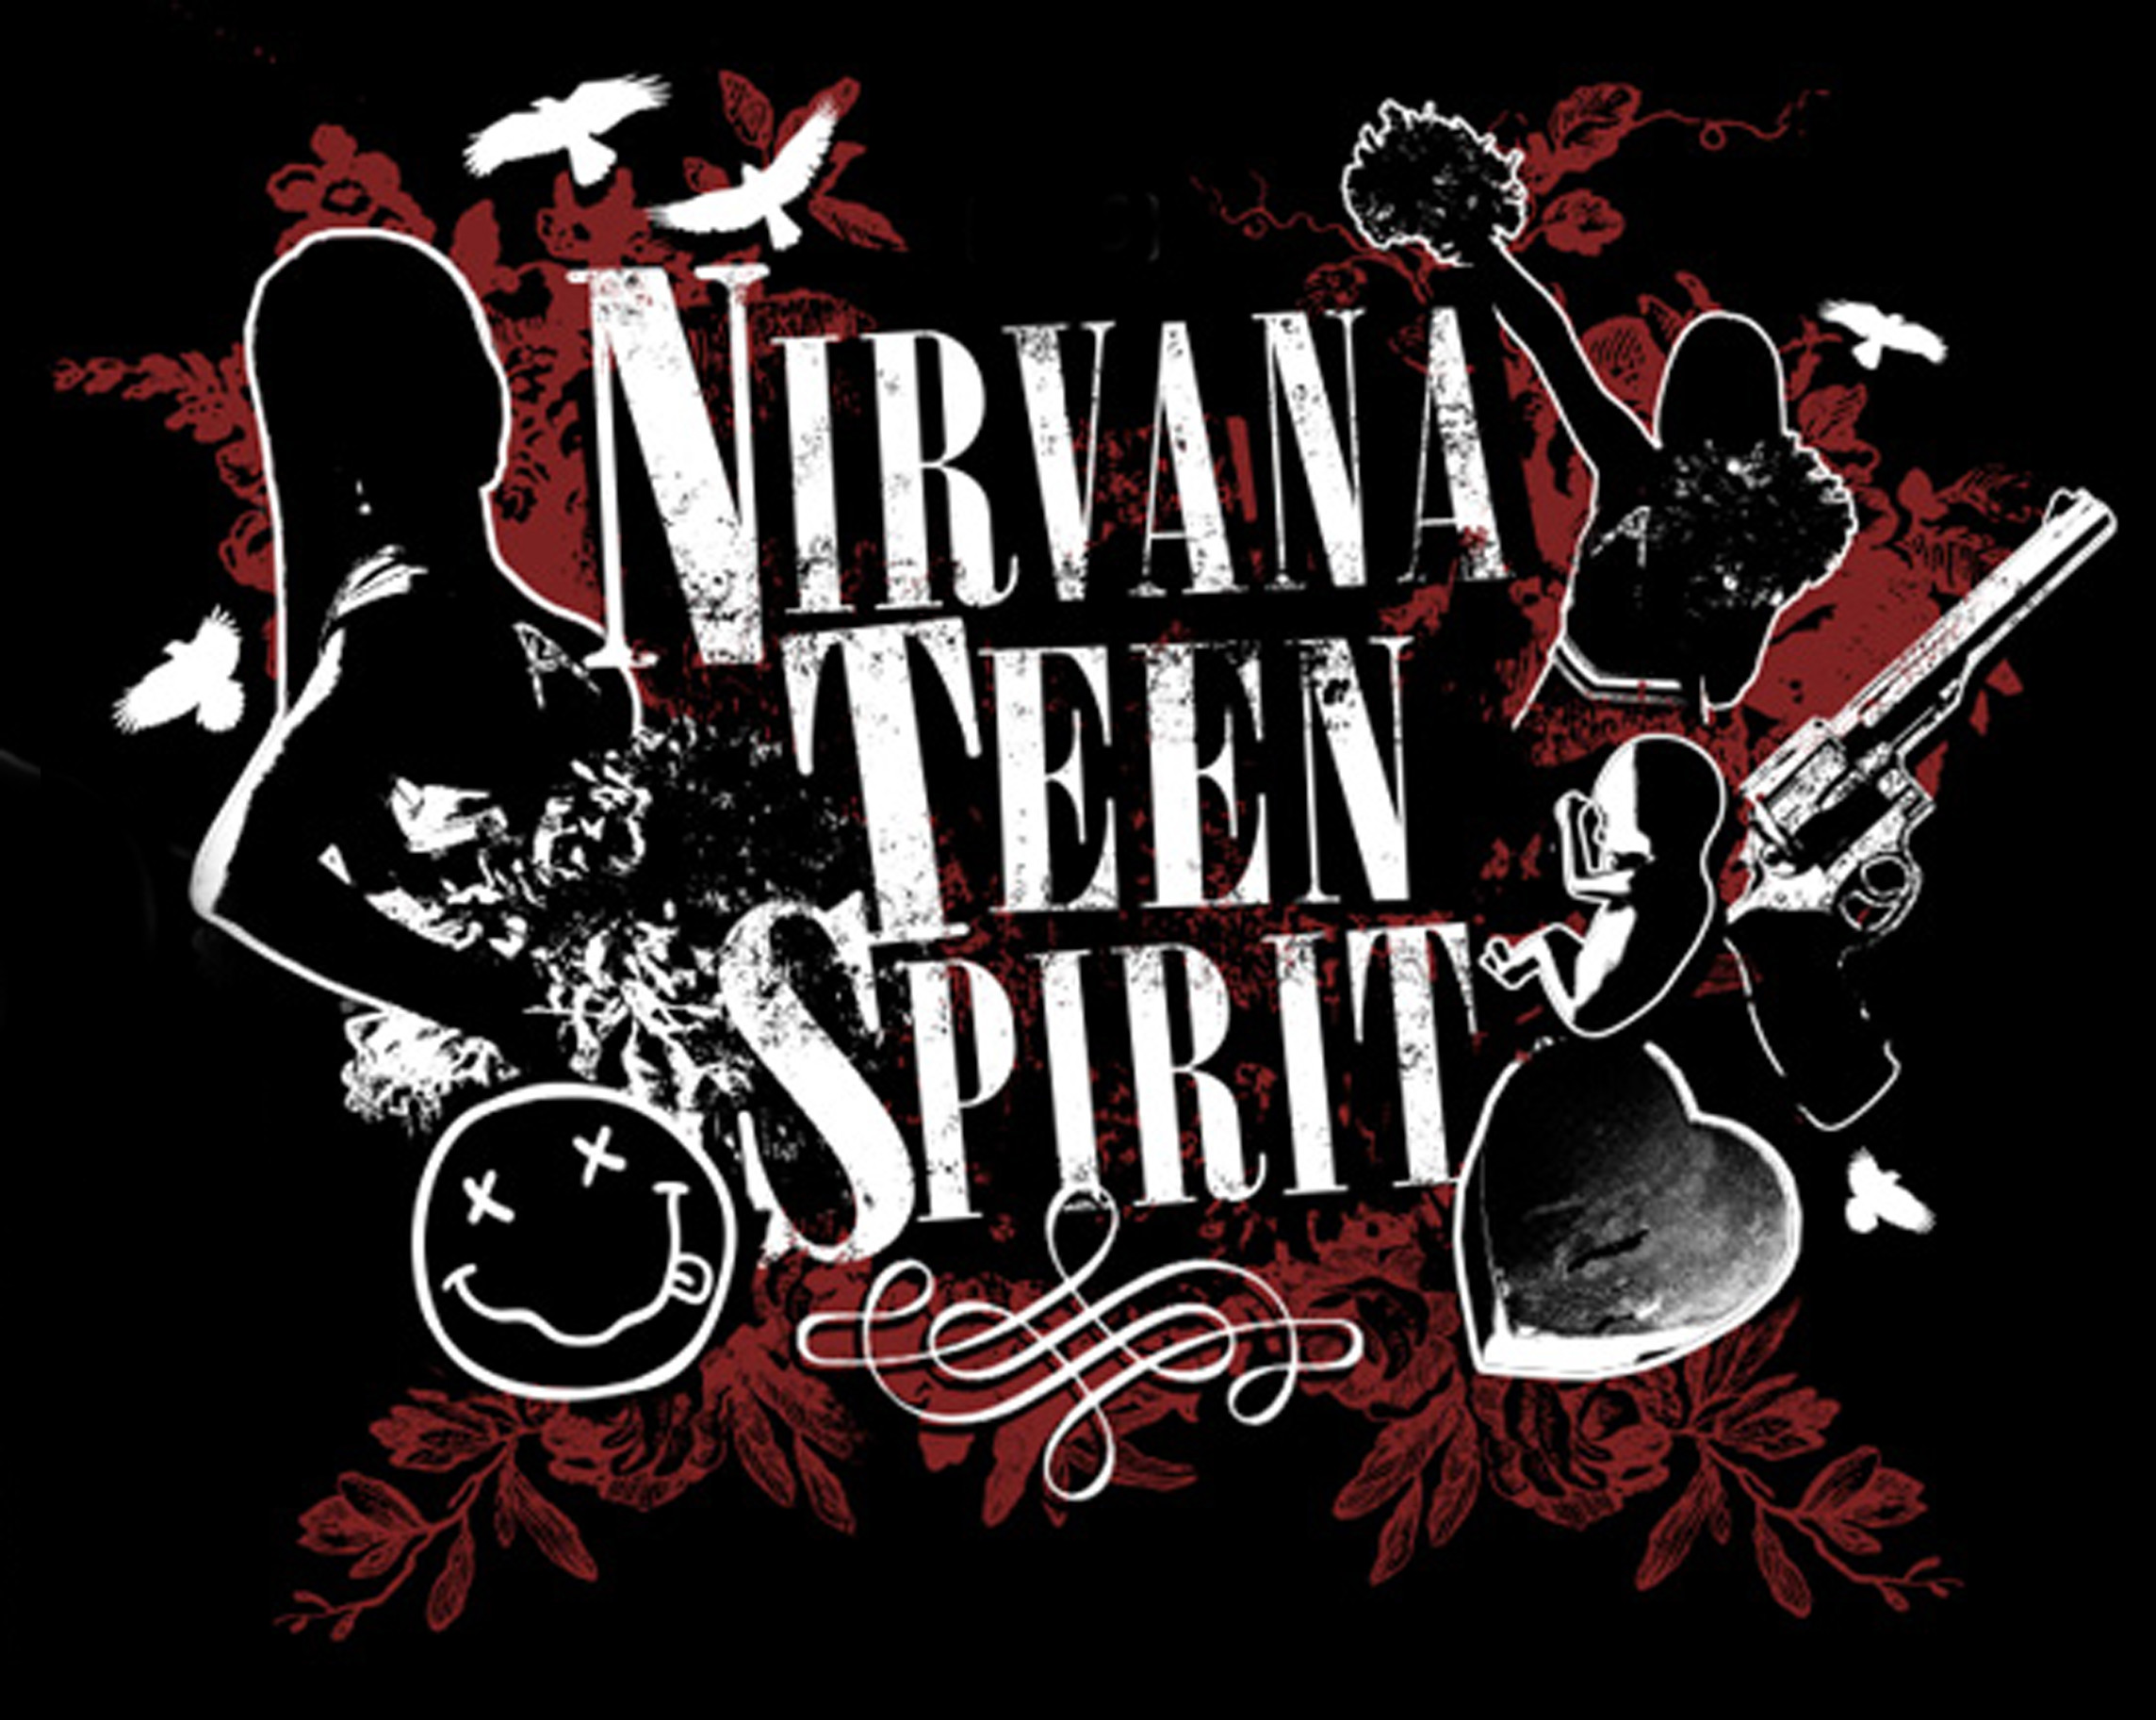 Nirvana логотип